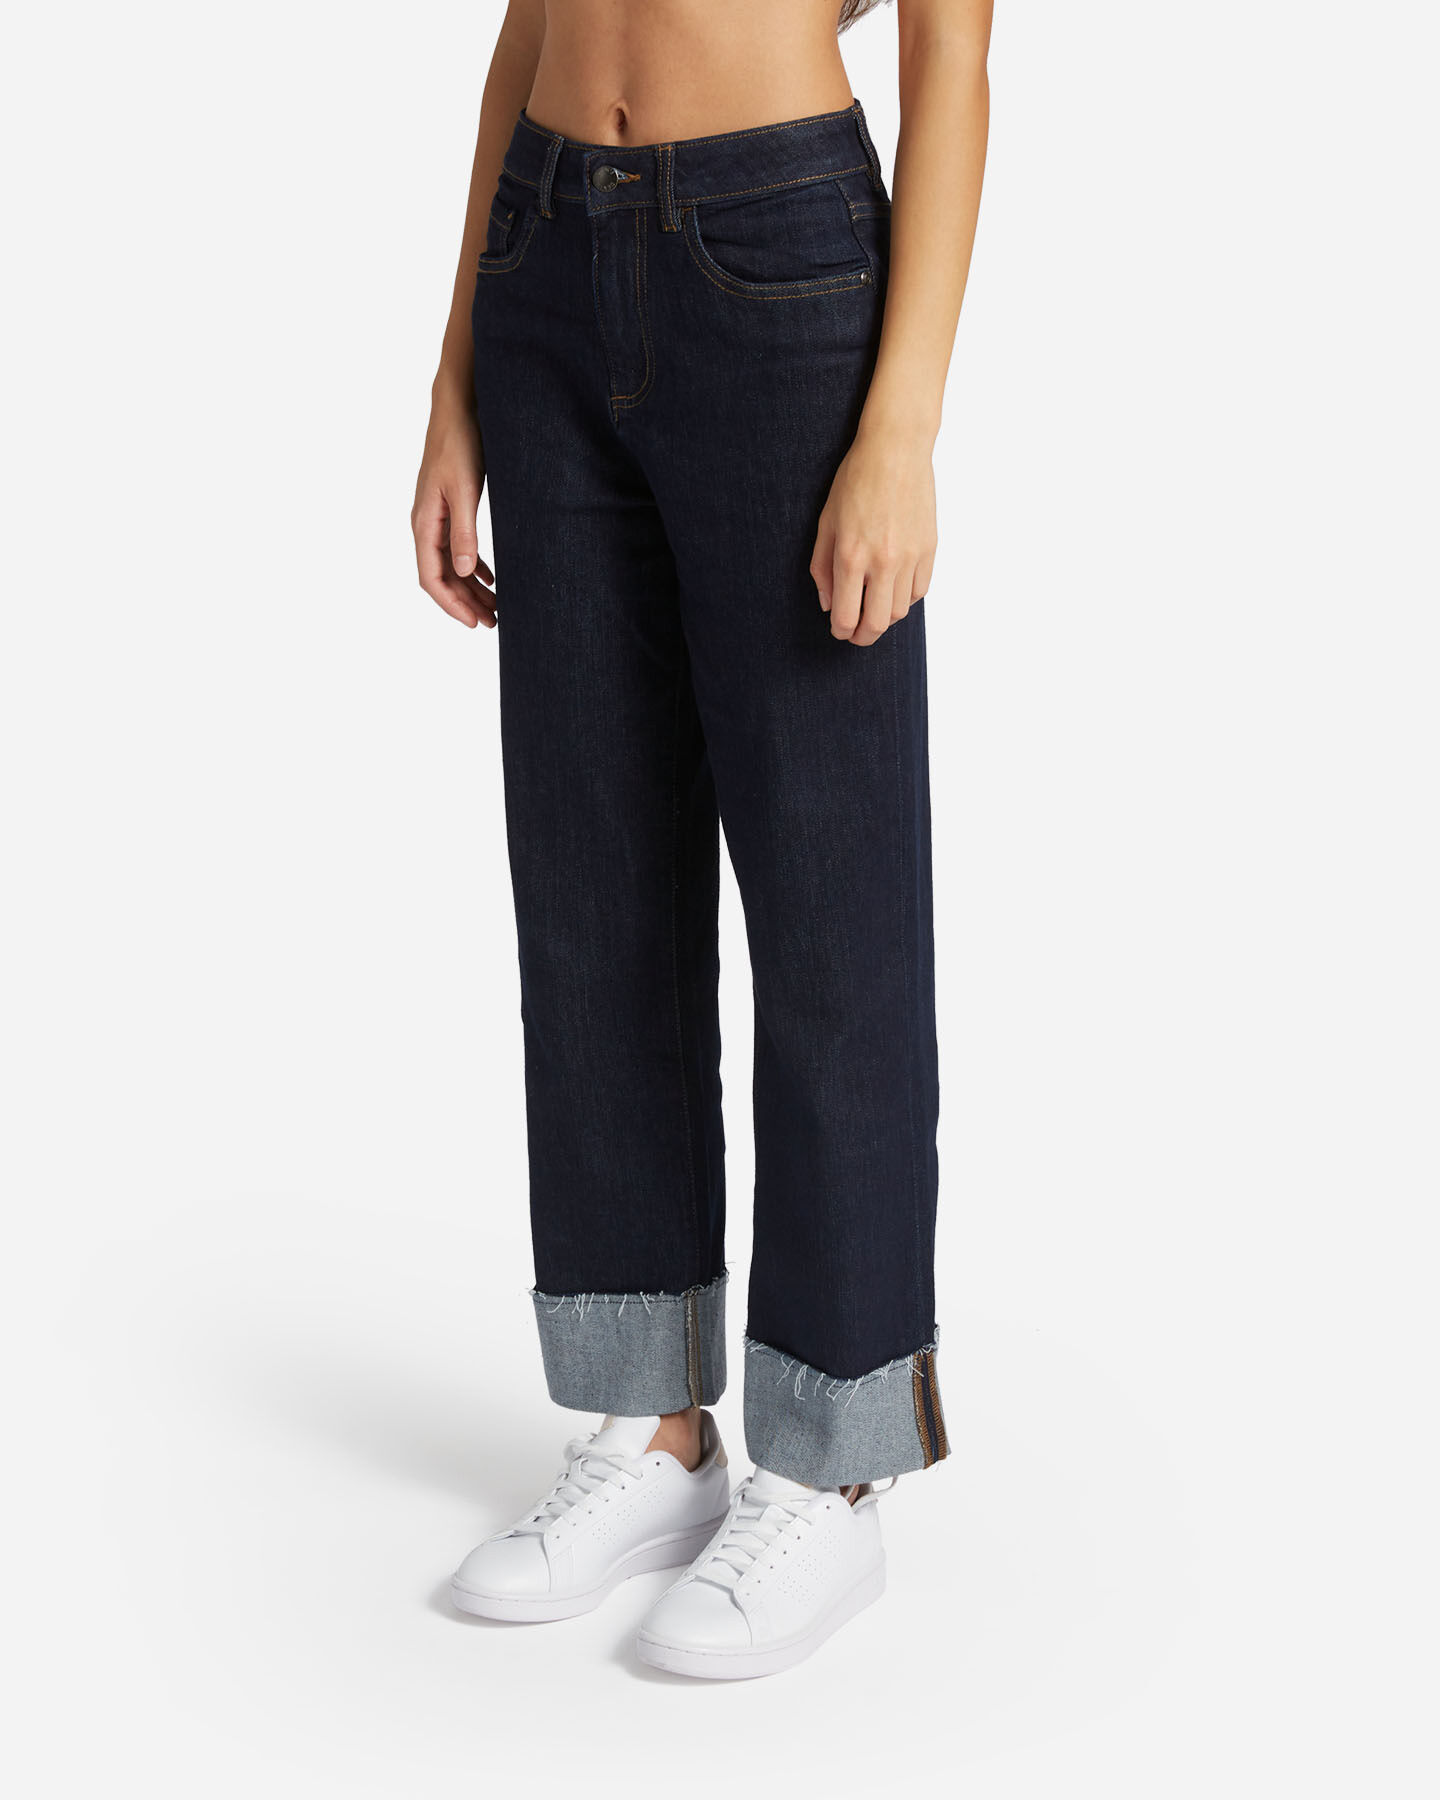  Jeans DACK'S DENIM PROJECT W S4127057|DD|46 scatto 2